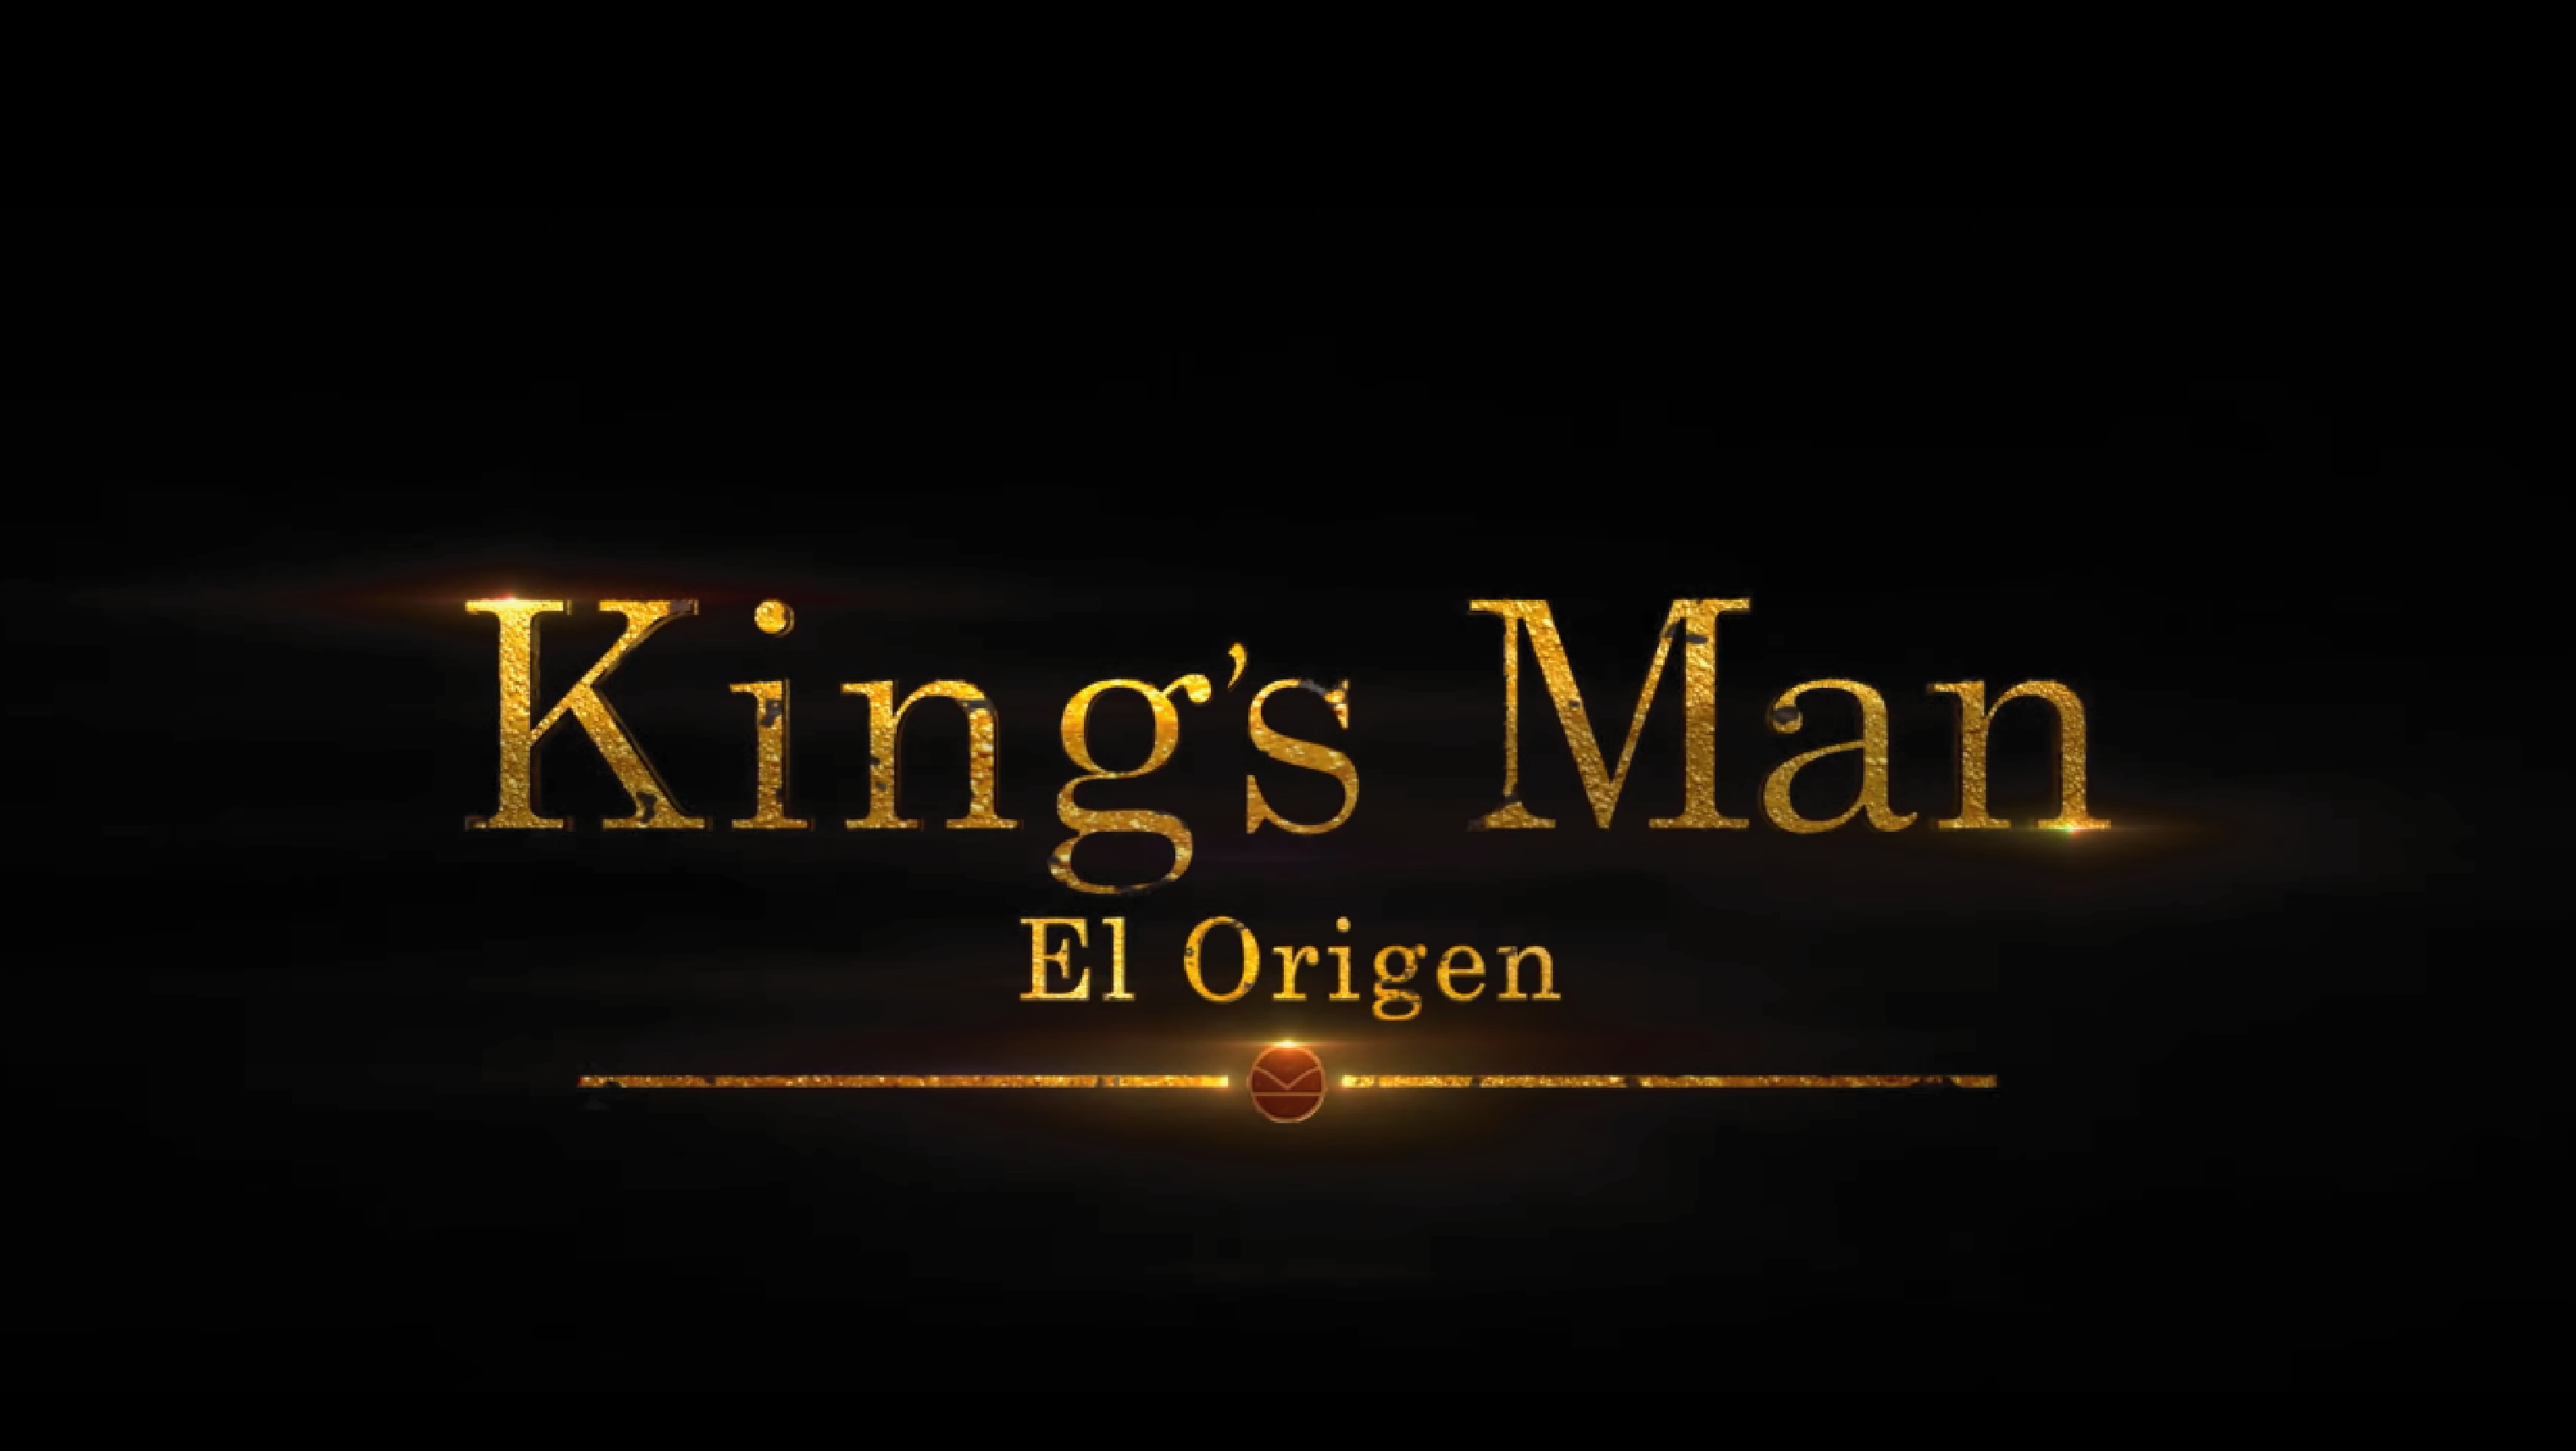 The King’s Man estrena su primer trailer